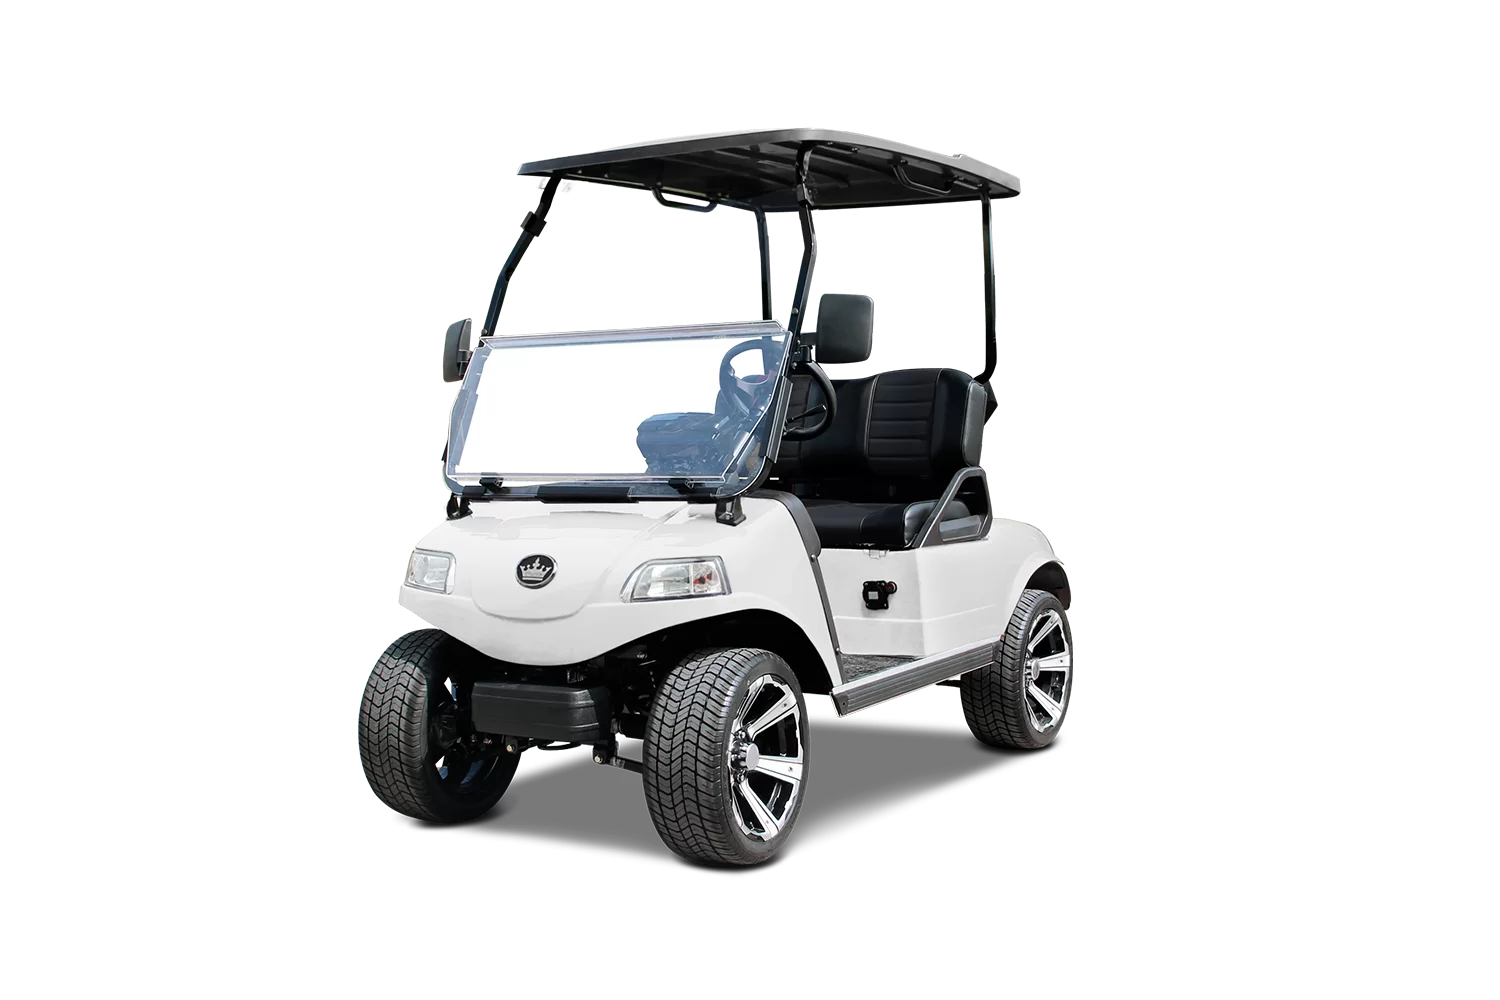 Tips for Choosing Street Legal Golf Carts